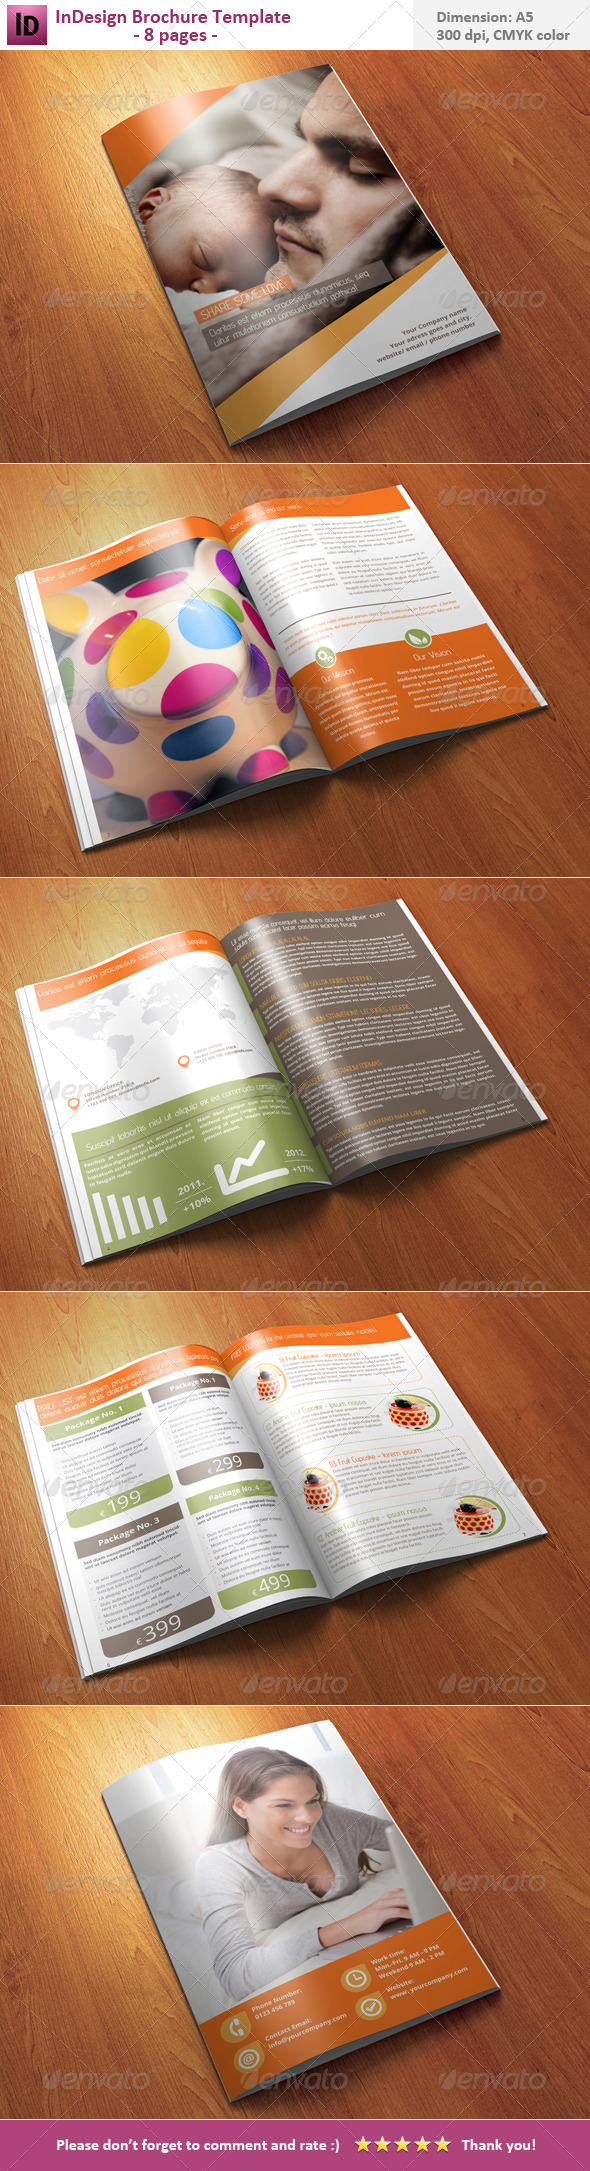 adobe indesign brochure templates